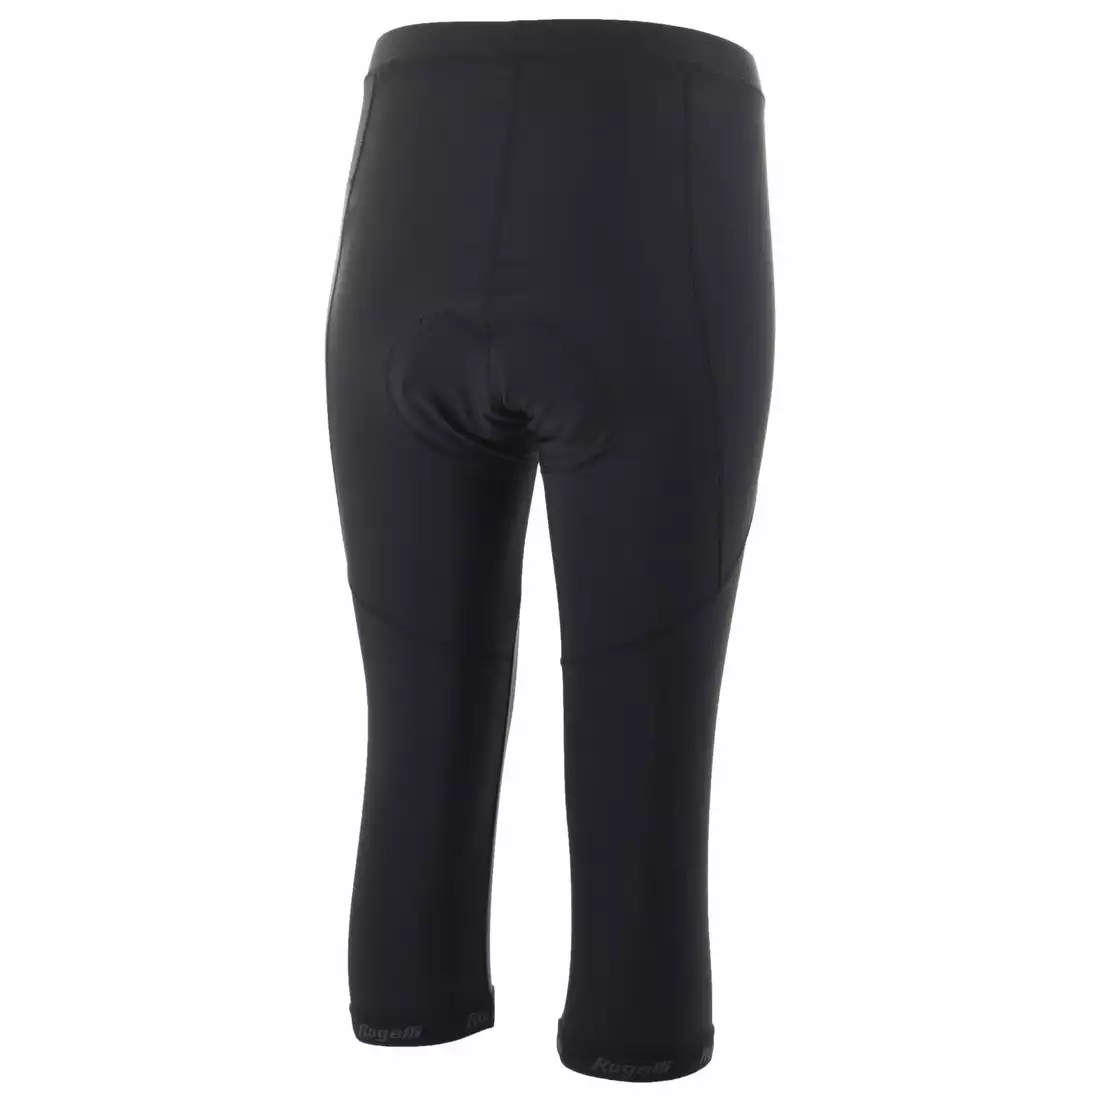 ROGELLI BIKE 010.262 BASIC women's bicycle pants 3/4 black